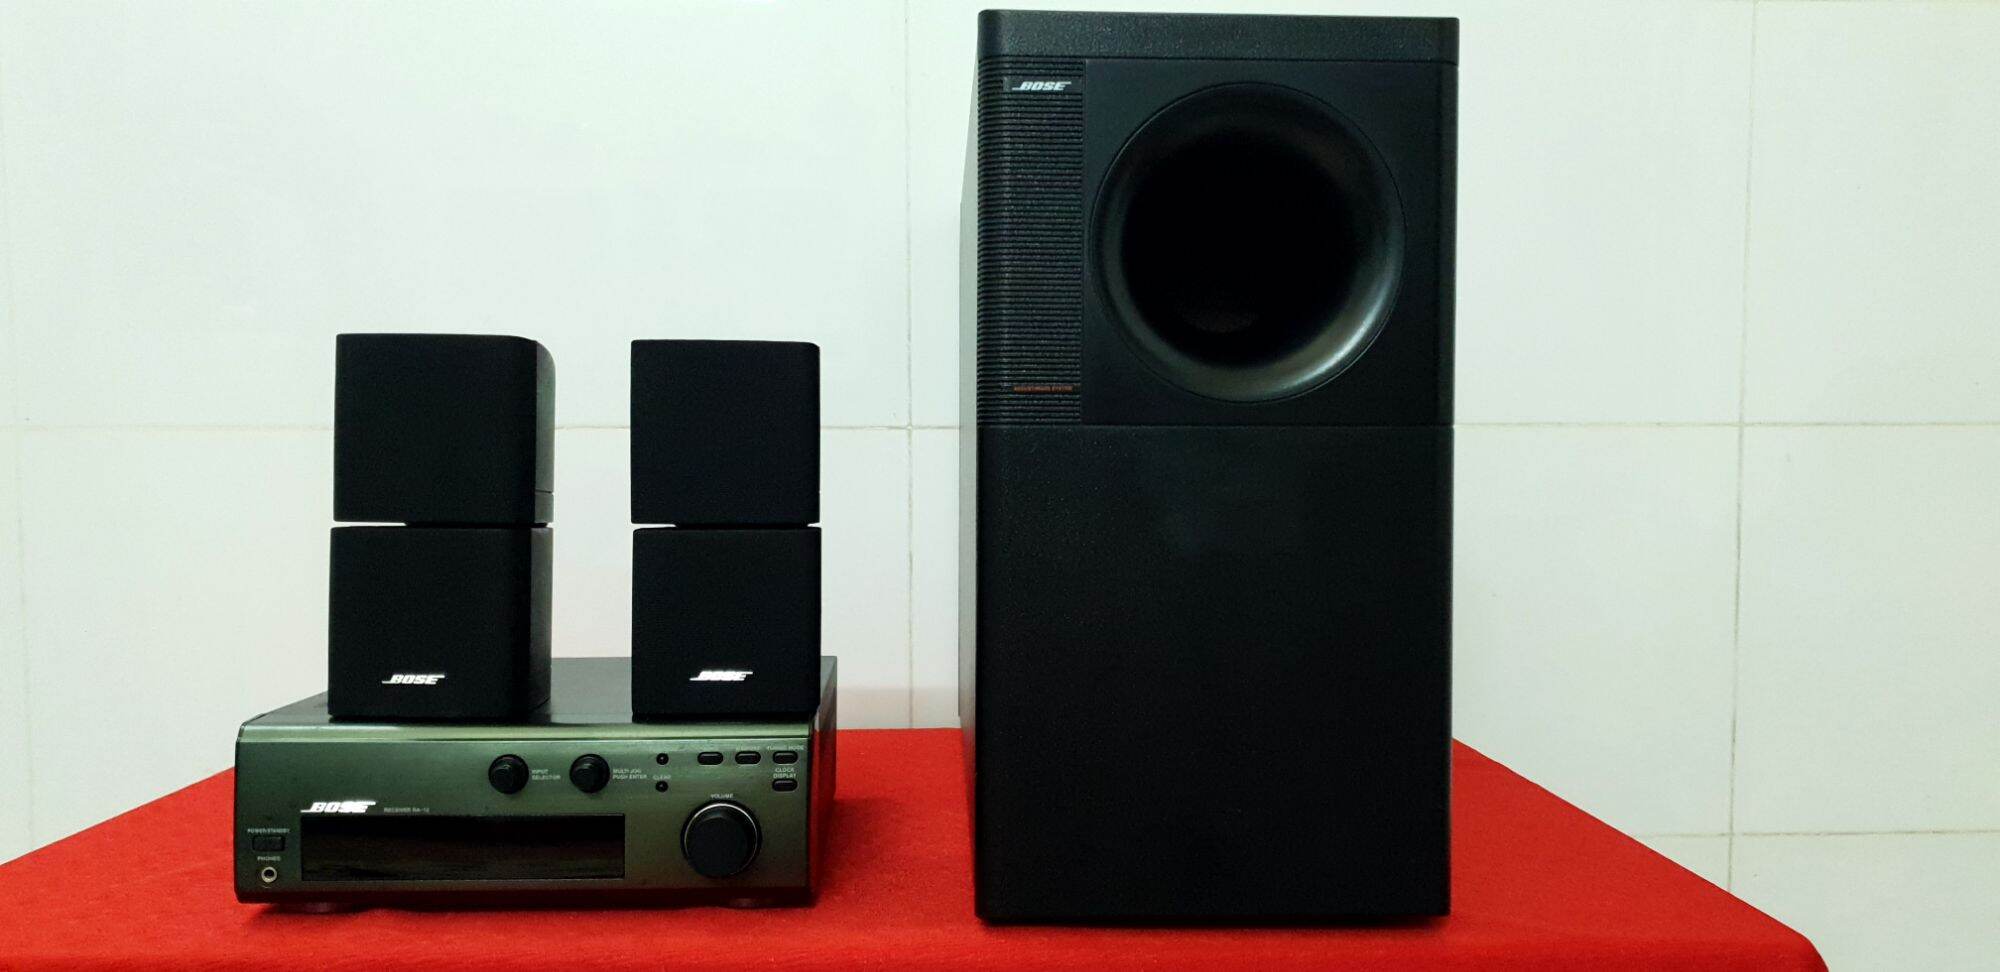 Bộ âm thanh Bose Loa Bose Acoustimass 5 Series 3 và Bose Receiver RA-12